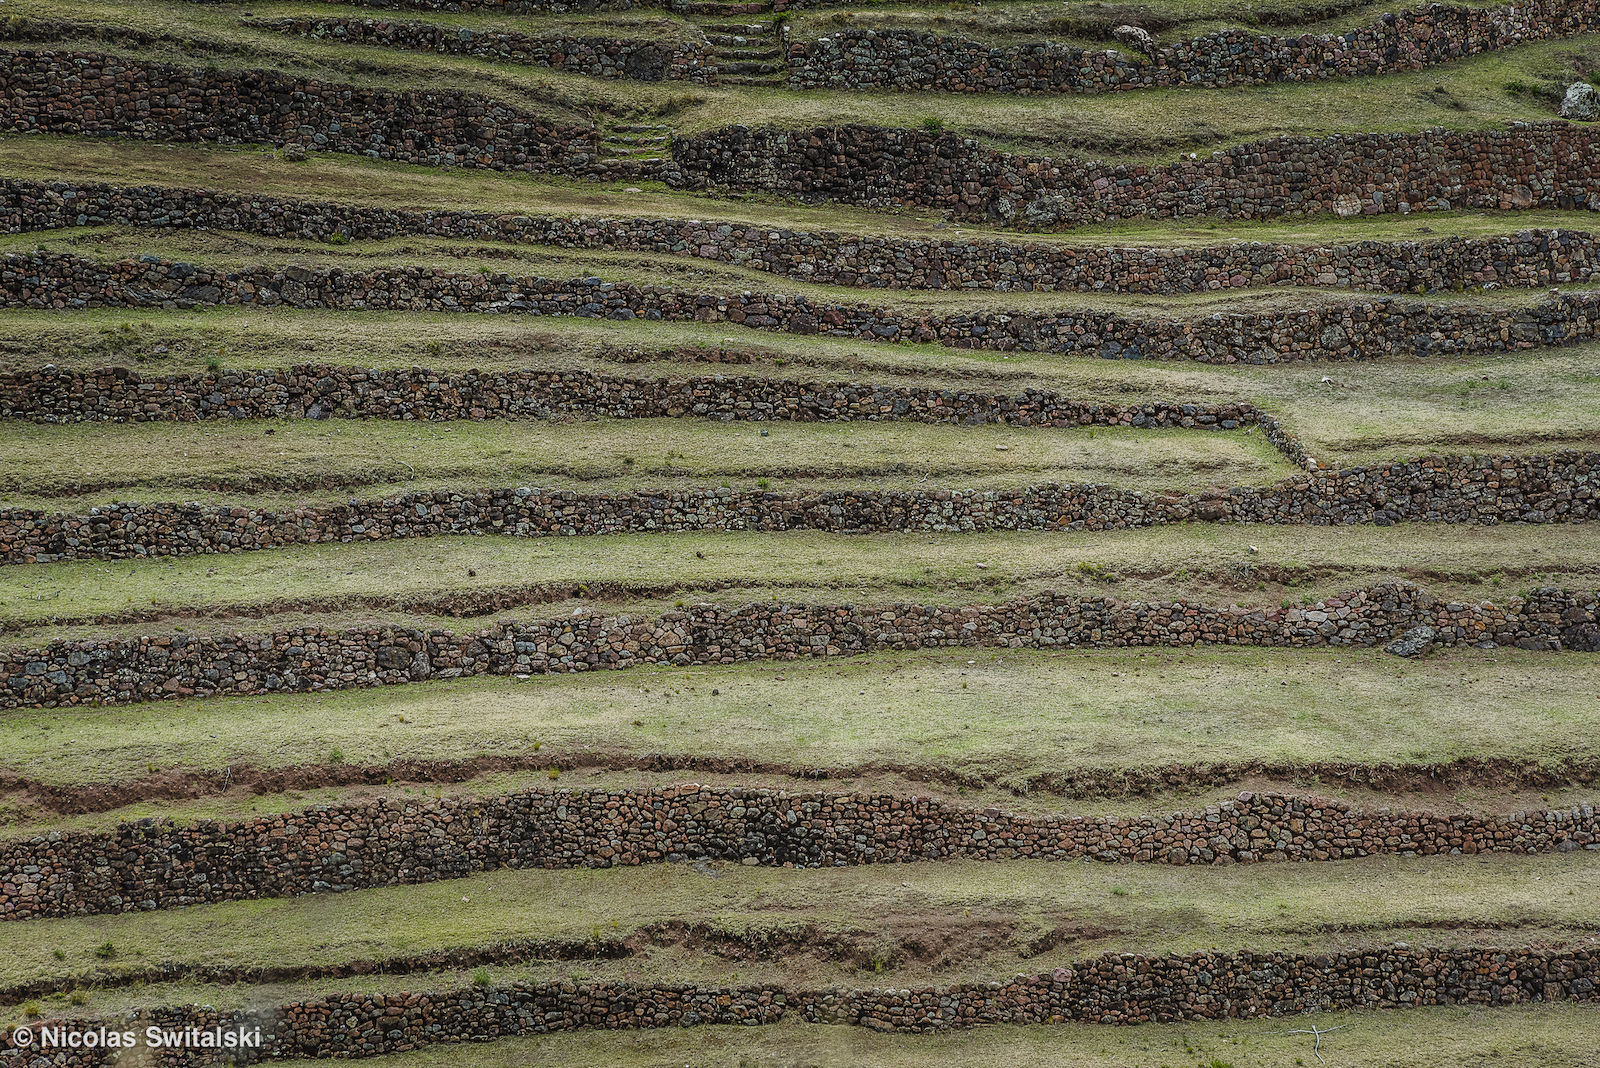 Peru - A Photo Story